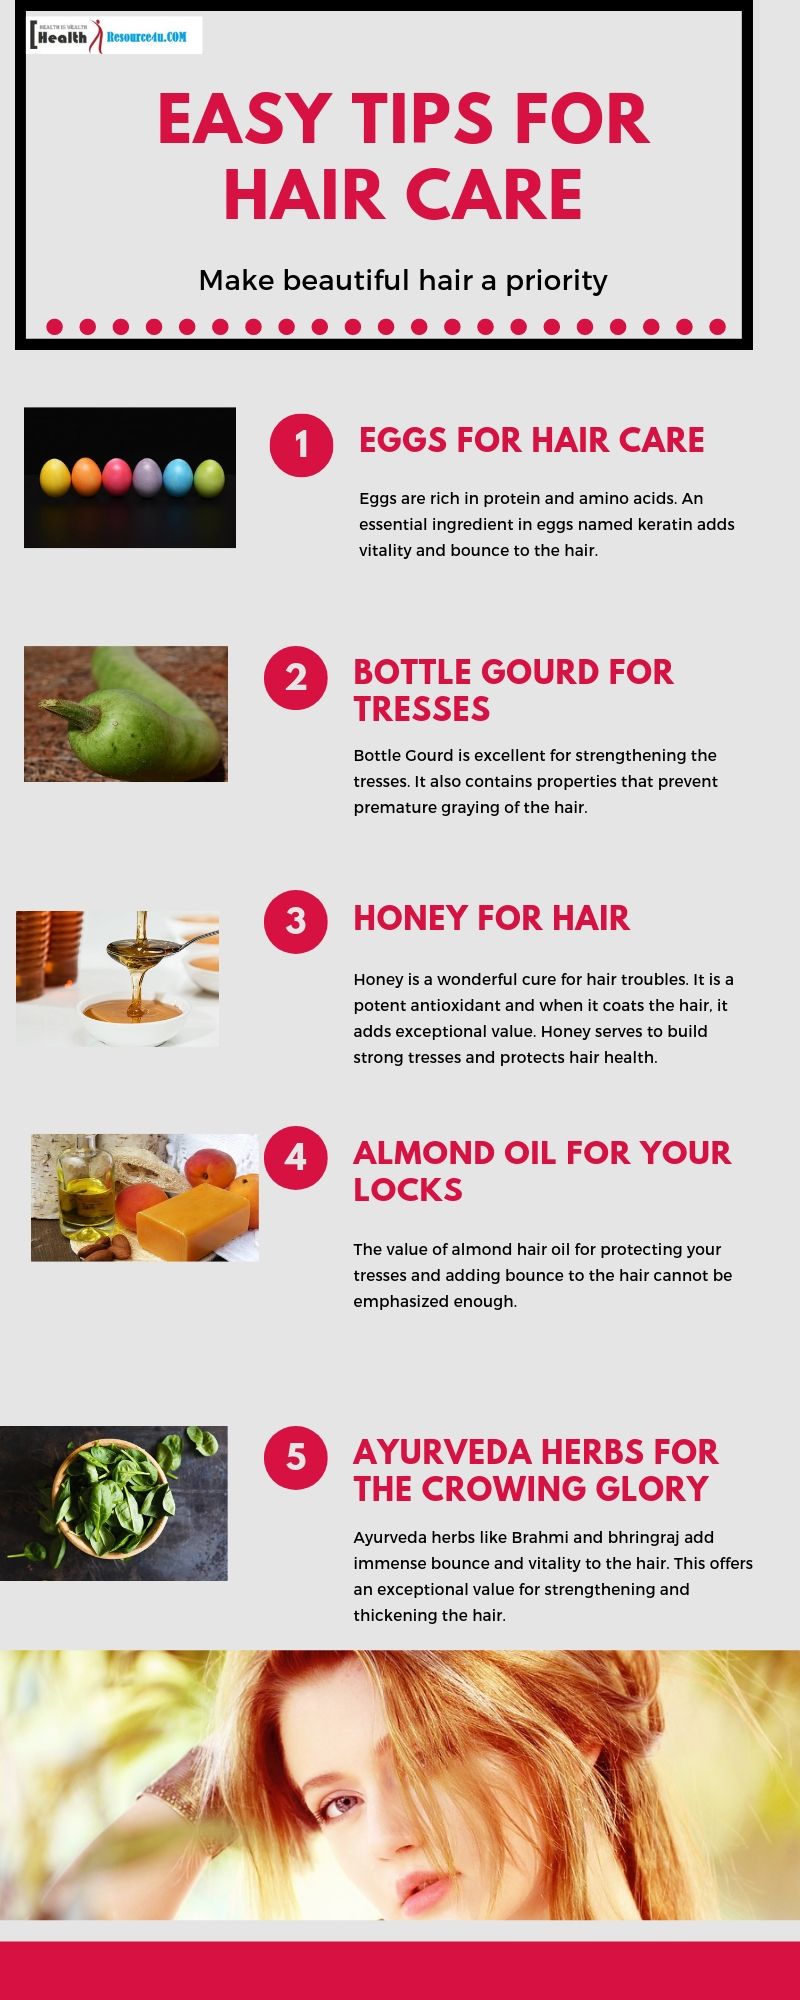 easy tips for hair care